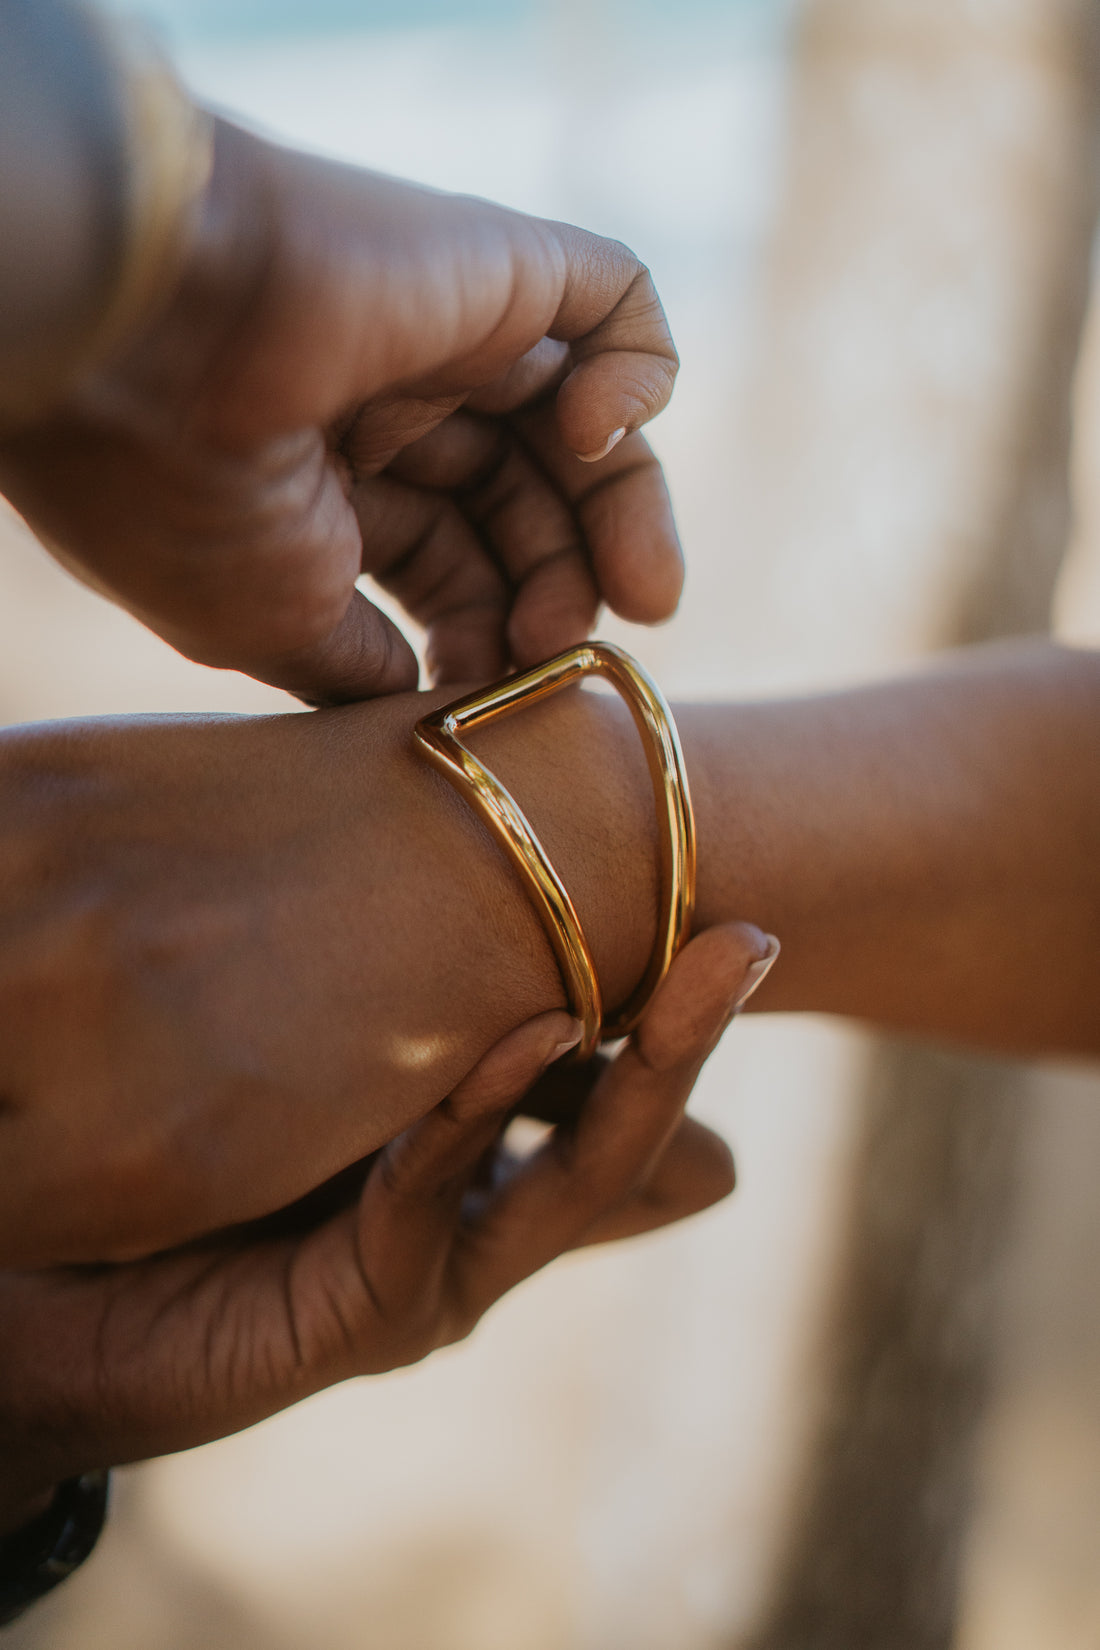 womans hands fastening a gold bracelet onto her wrist